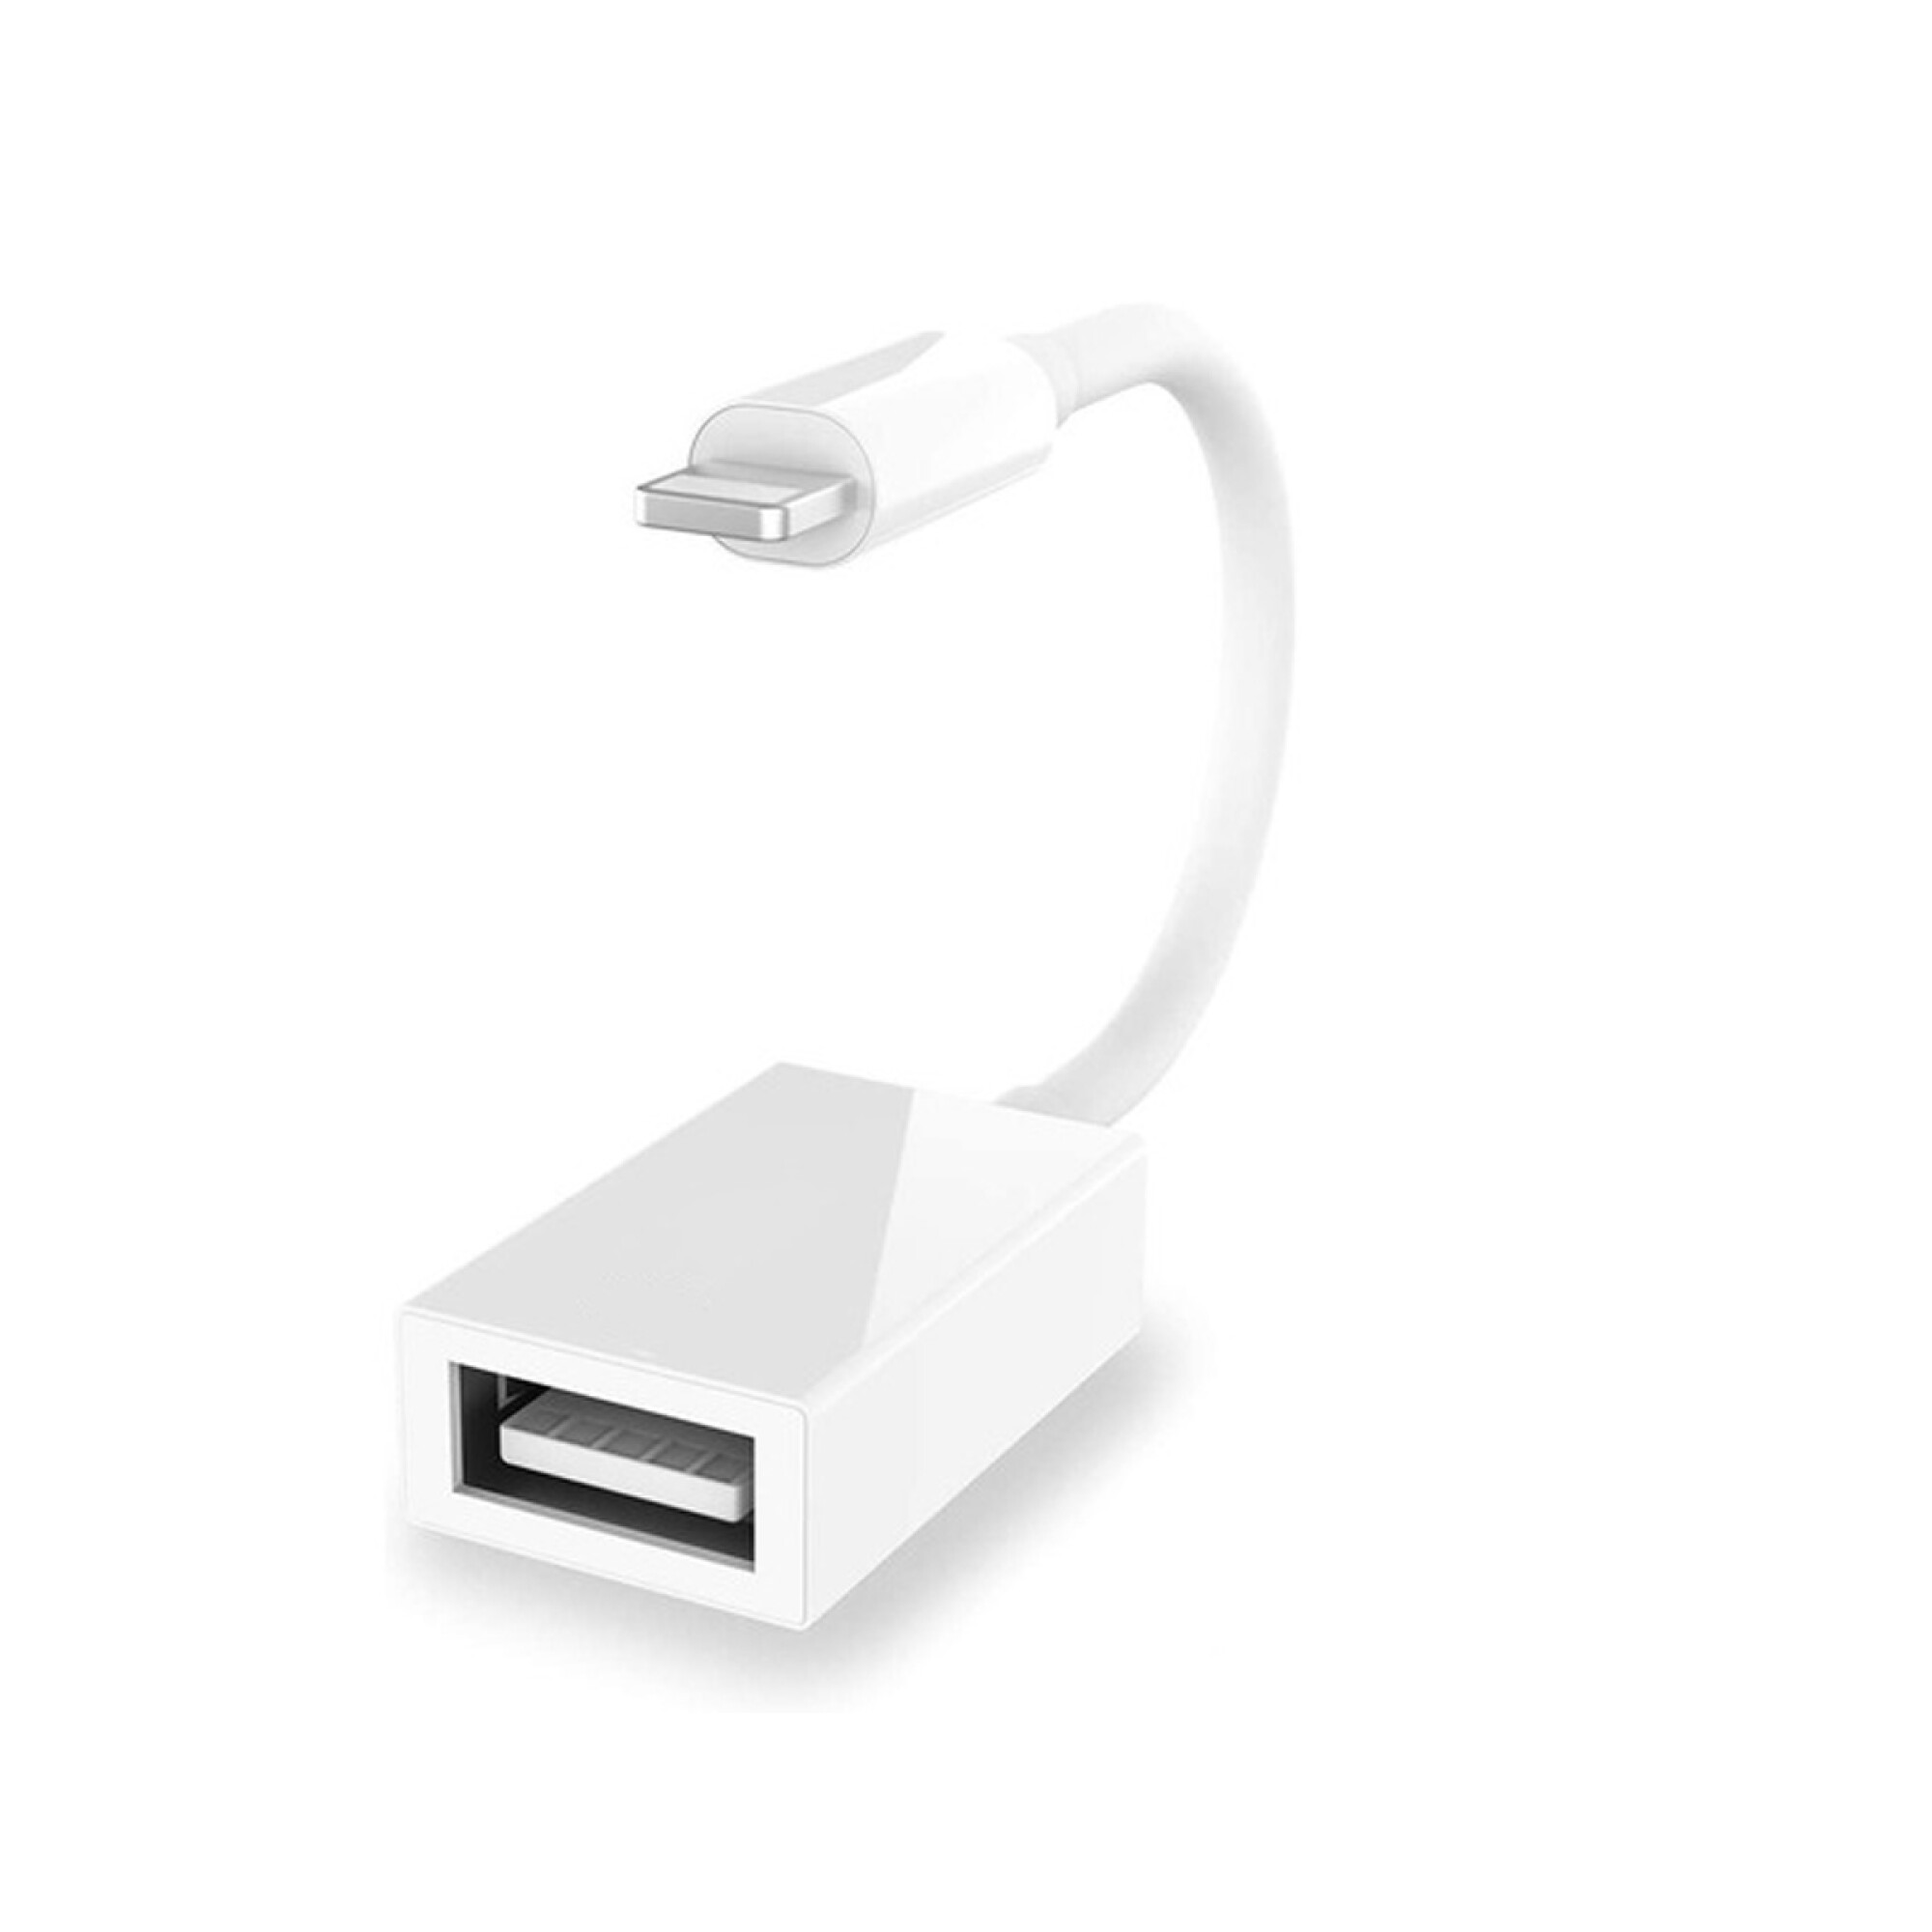 Adaptador USB OTG Lightning para Iphone Daycell UA17